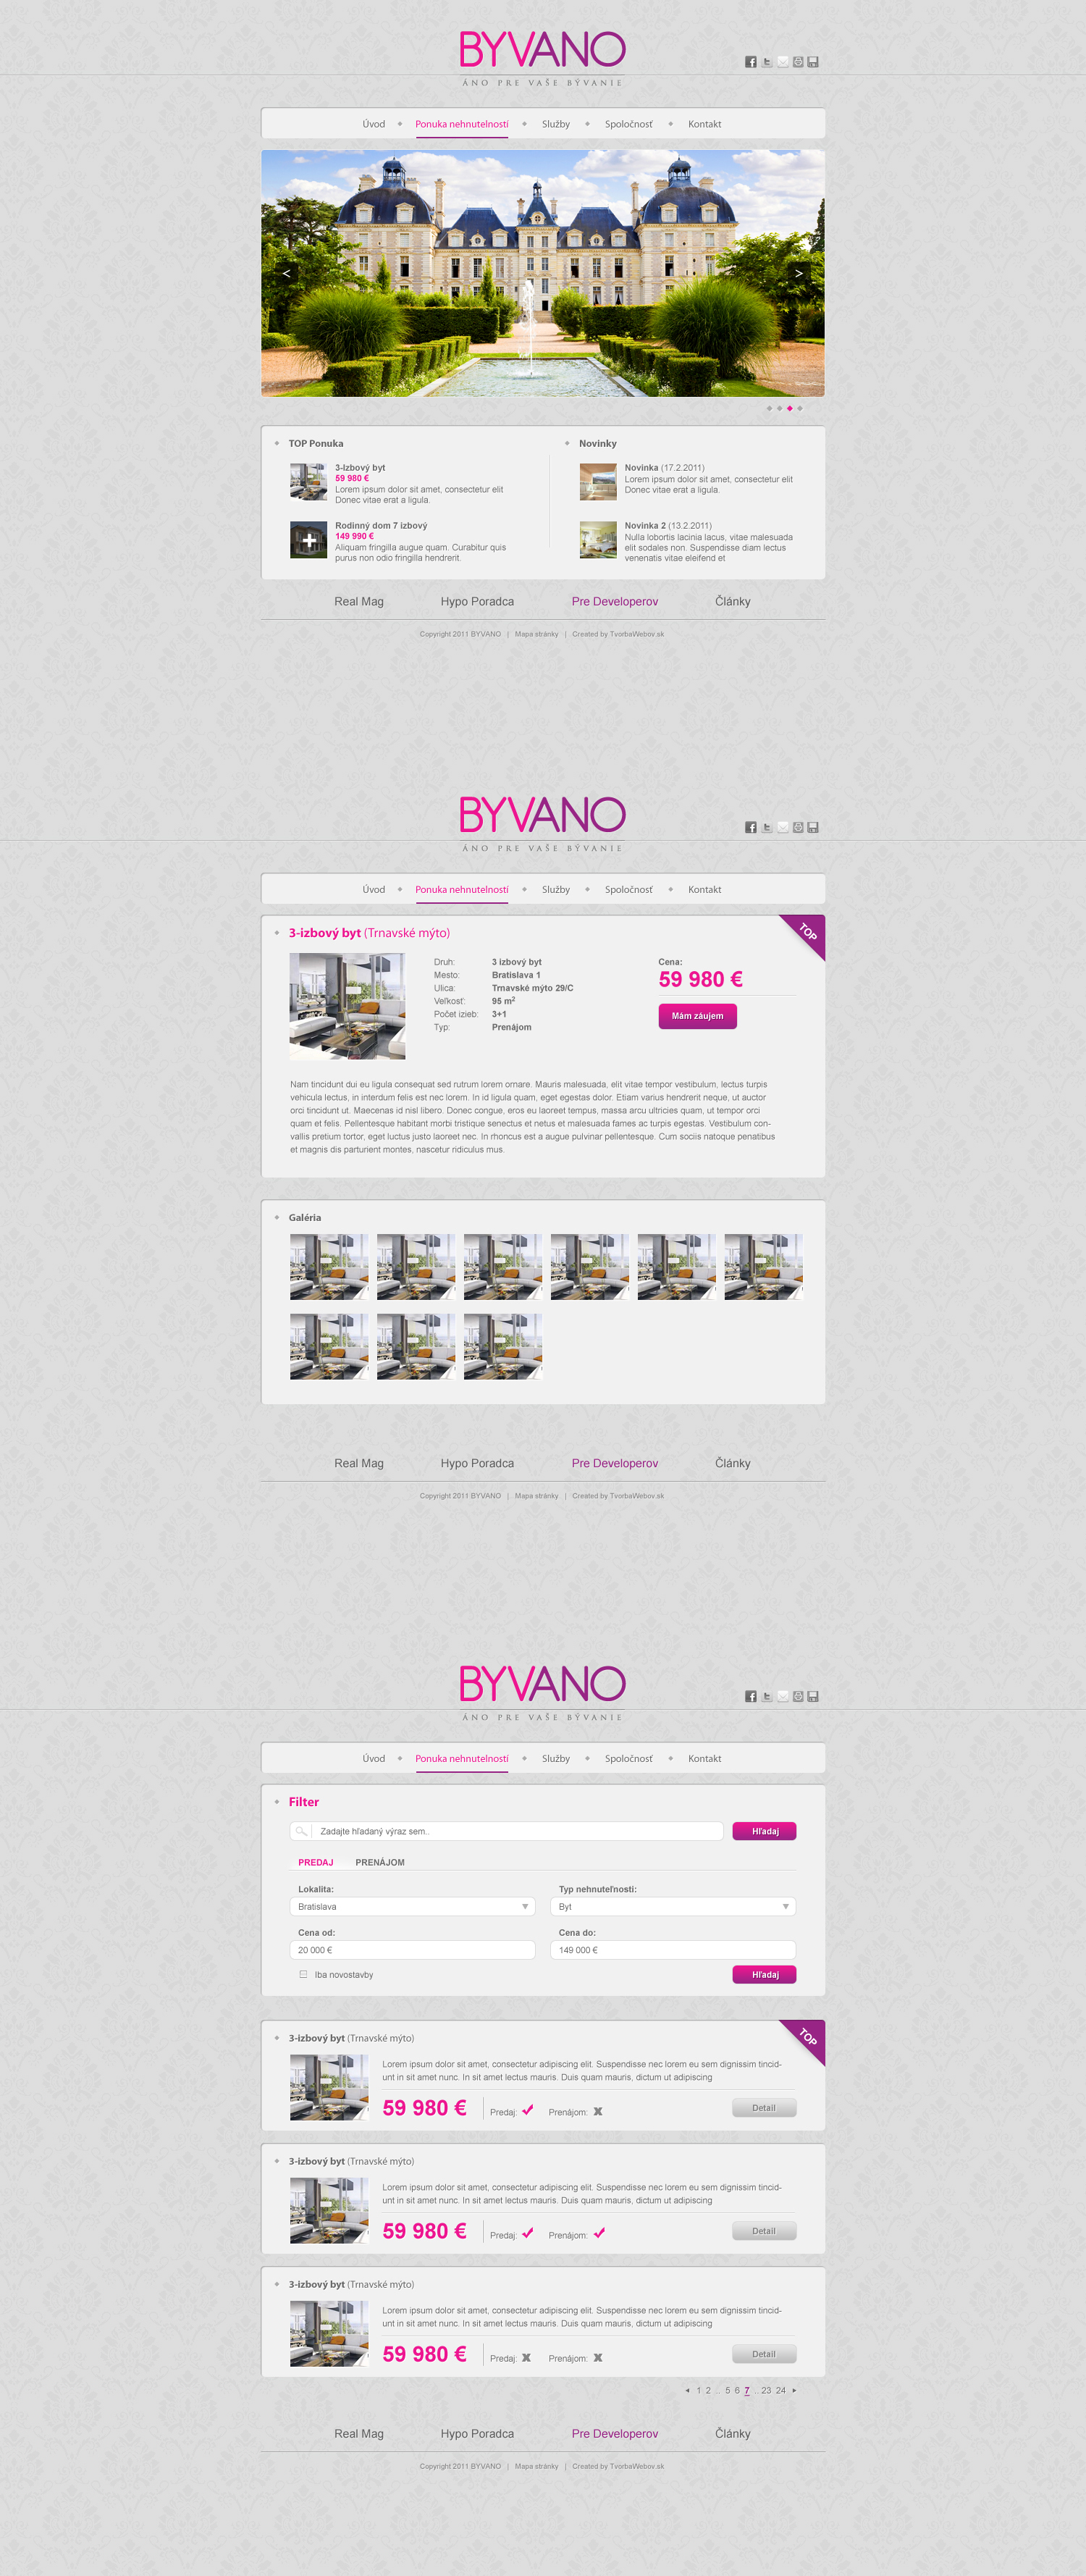 Byvano website design